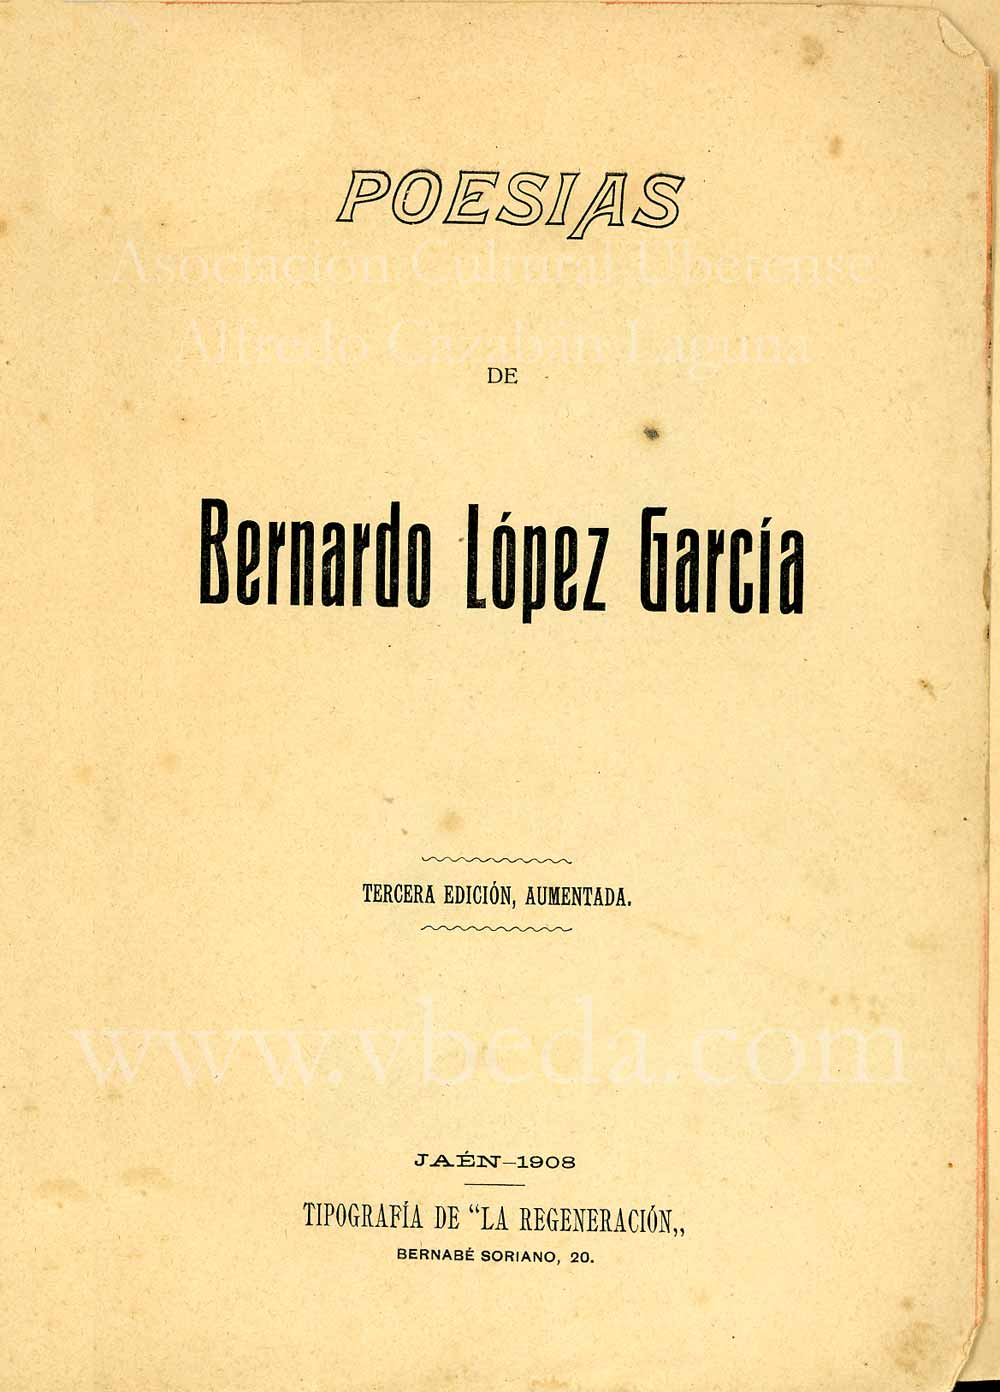 Poesas de Bernardo Lpez Garca